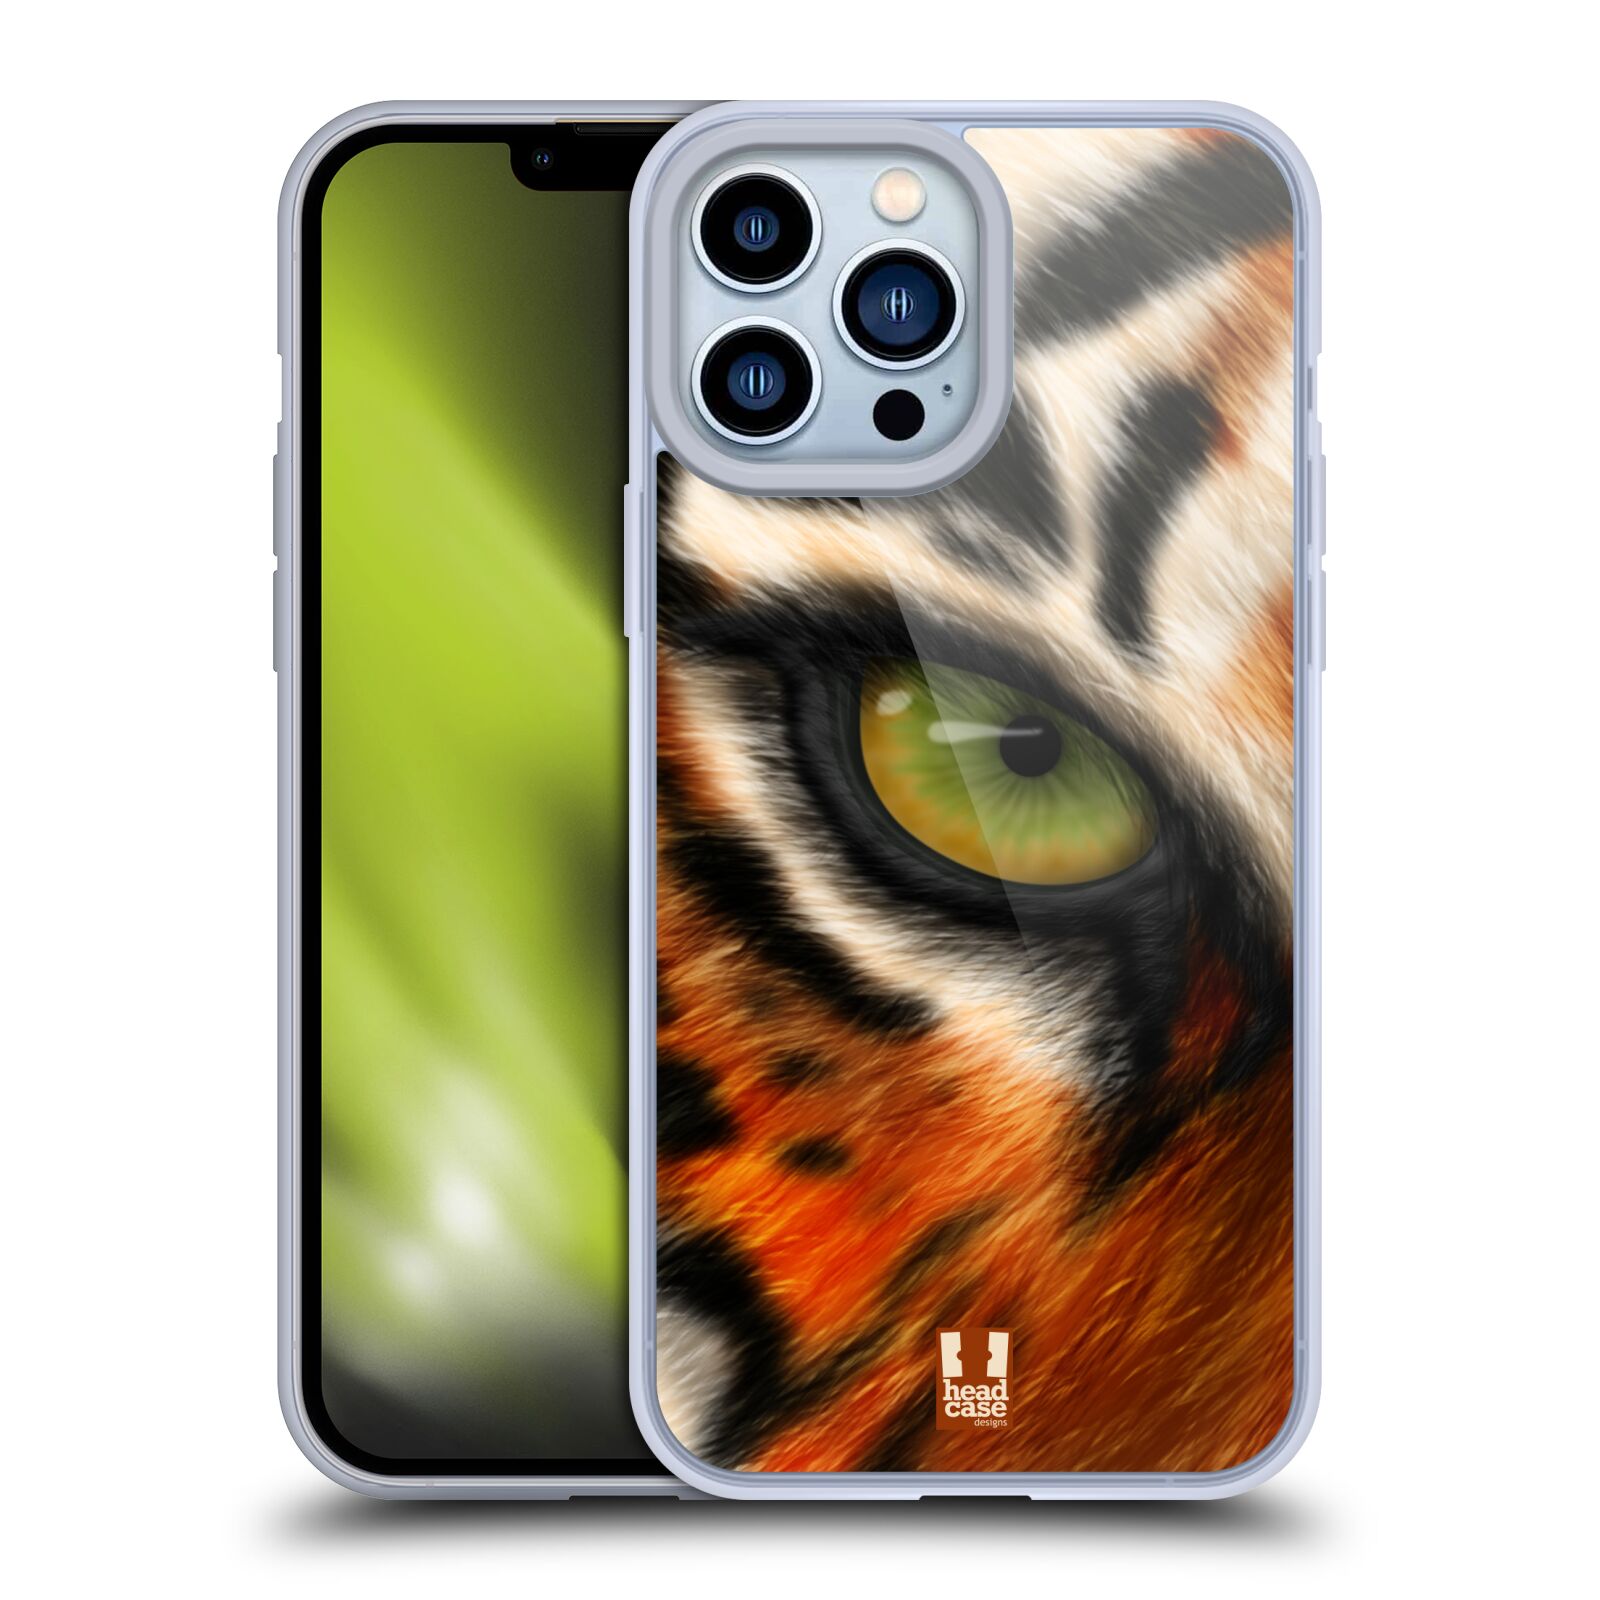 Plastový obal HEAD CASE na mobil Apple Iphone 13 PRO MAX vzor pohled zvířete oko tygr